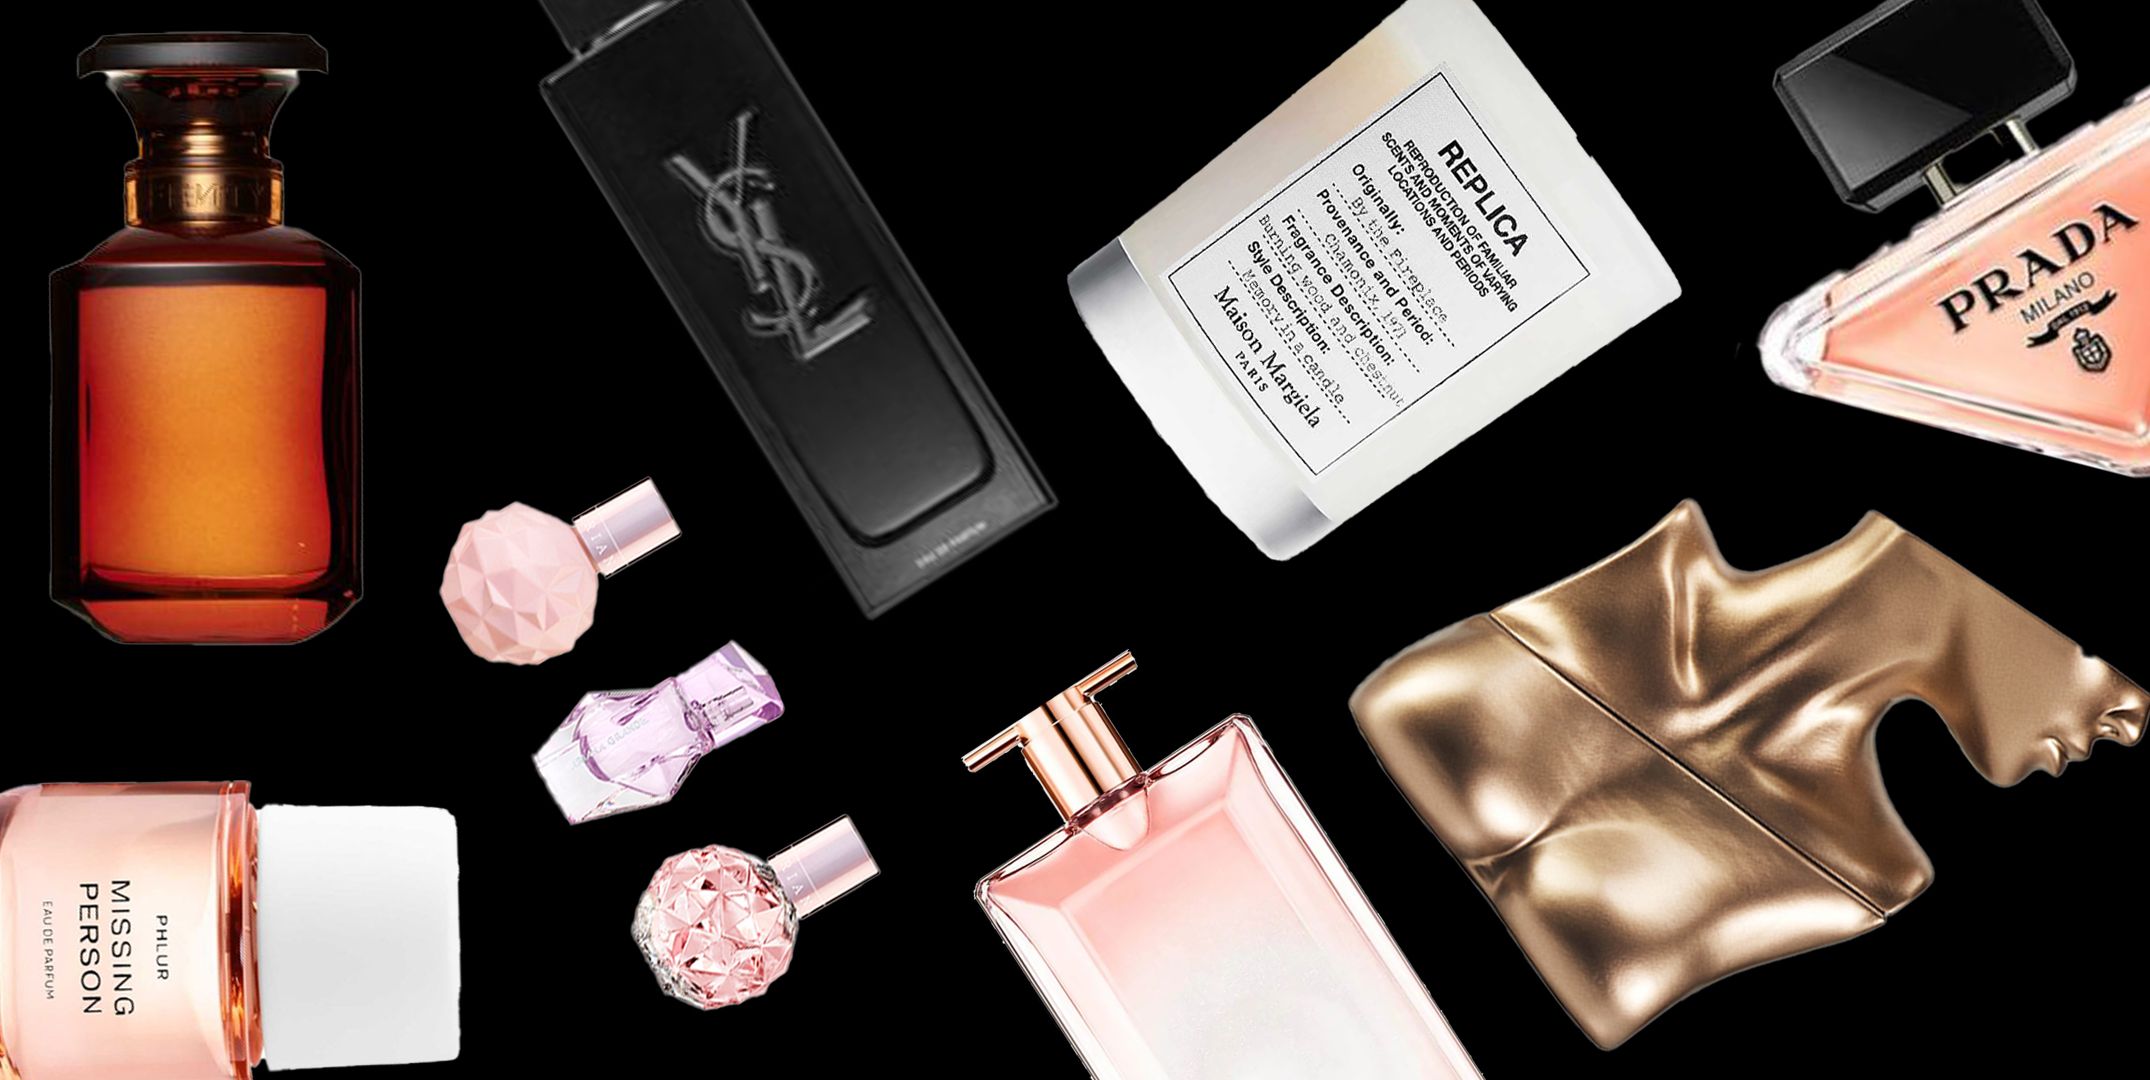 Give Eau Noire unisex fragrance - Holiday Gift Idea